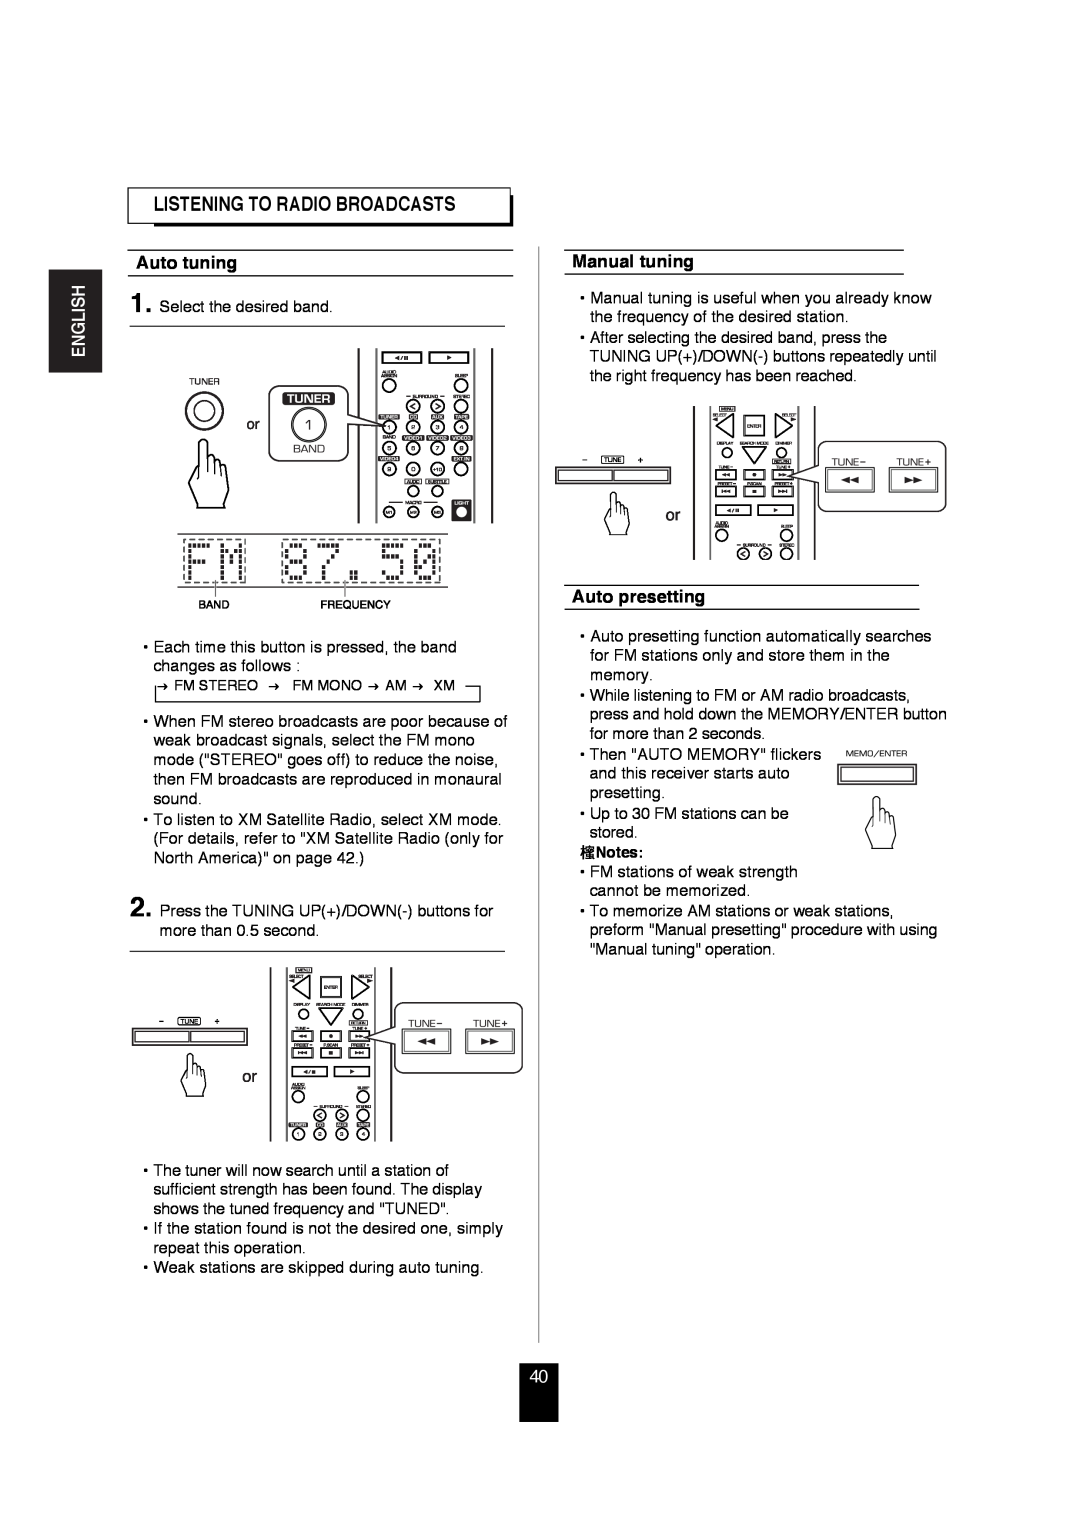 Sherwood R-872 manual Listening To Radio Broadcasts, Auto tuning, Manual tuning, Auto presetting, English 